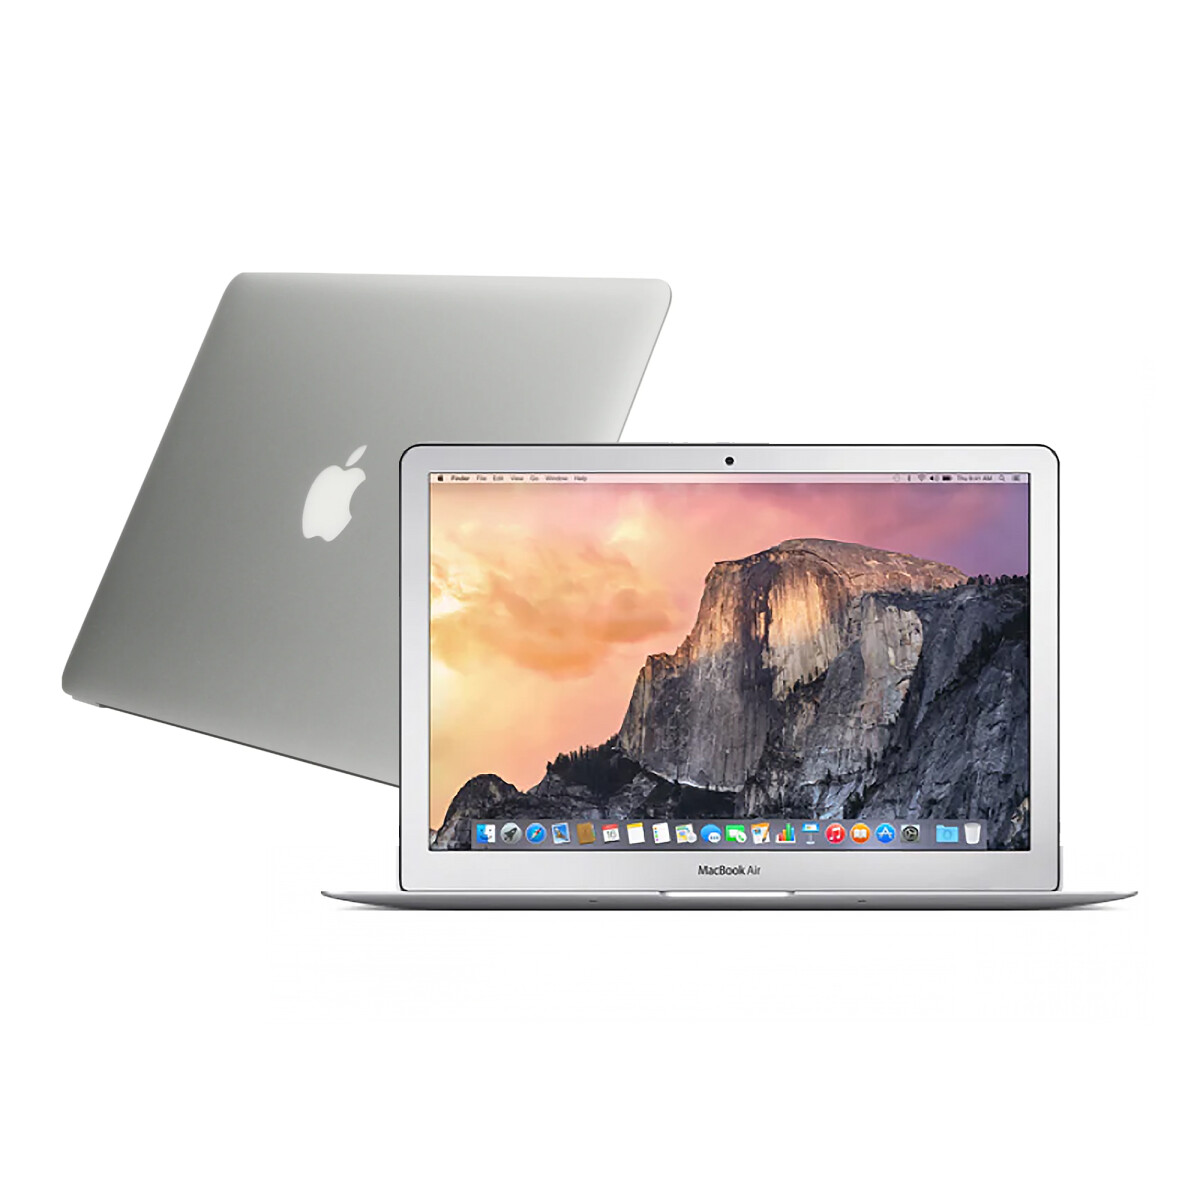 Notebook Apple Macbook Air 2017 MQD32LL/A I7 256GB 8GB - PLATEADO 